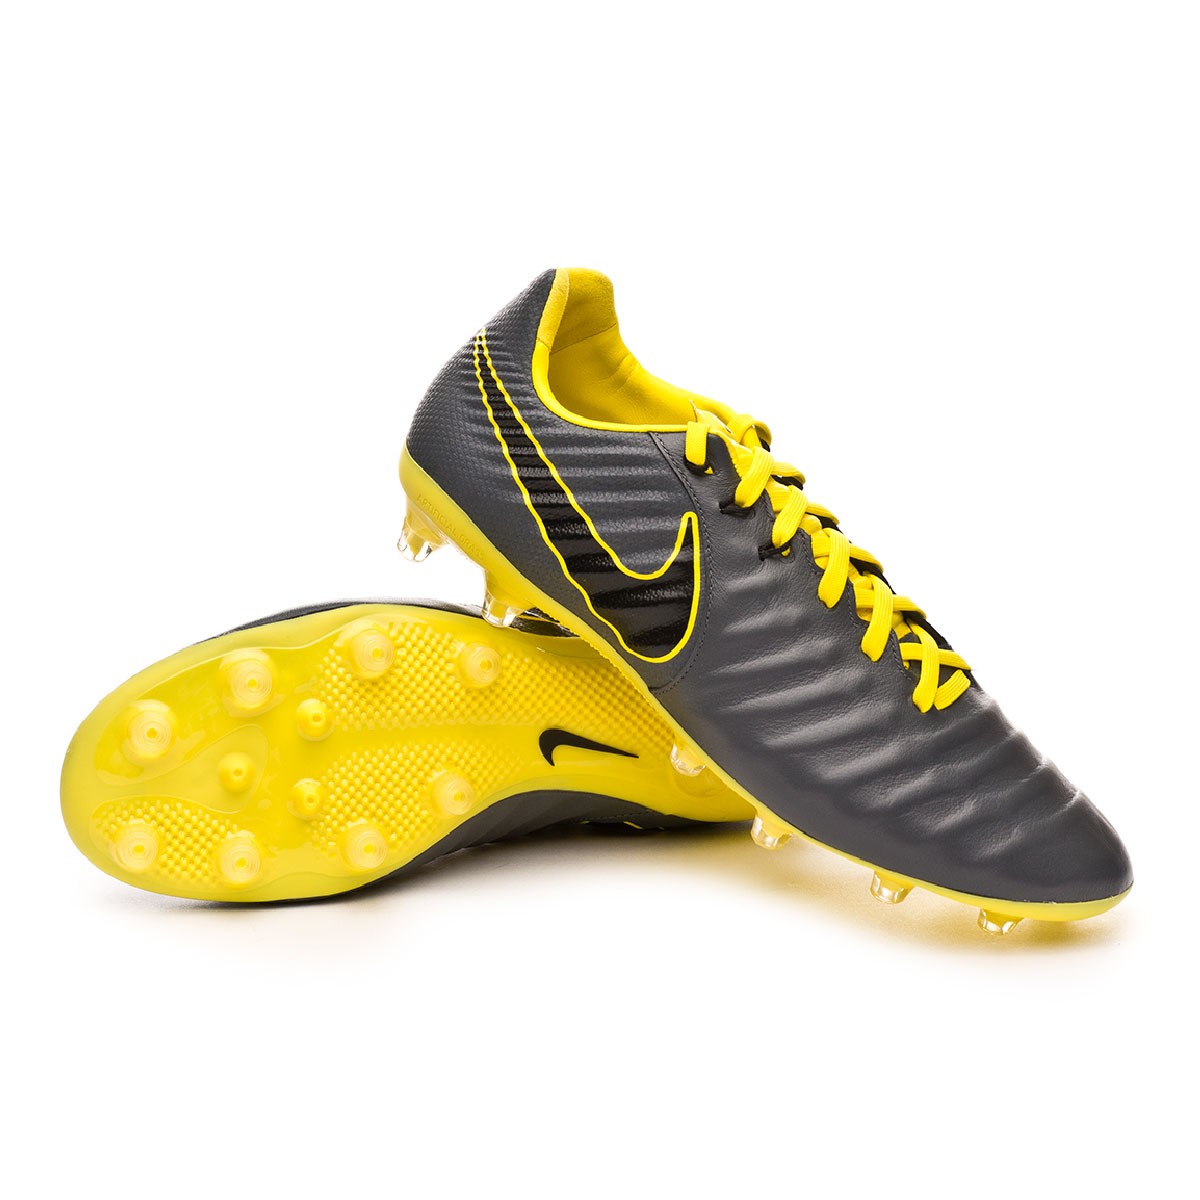 Football Boots Nike Tiempo Legend VII Pro AG-Pro Dark grey-Black-Optical  yellow - Football store Fútbol Emotion